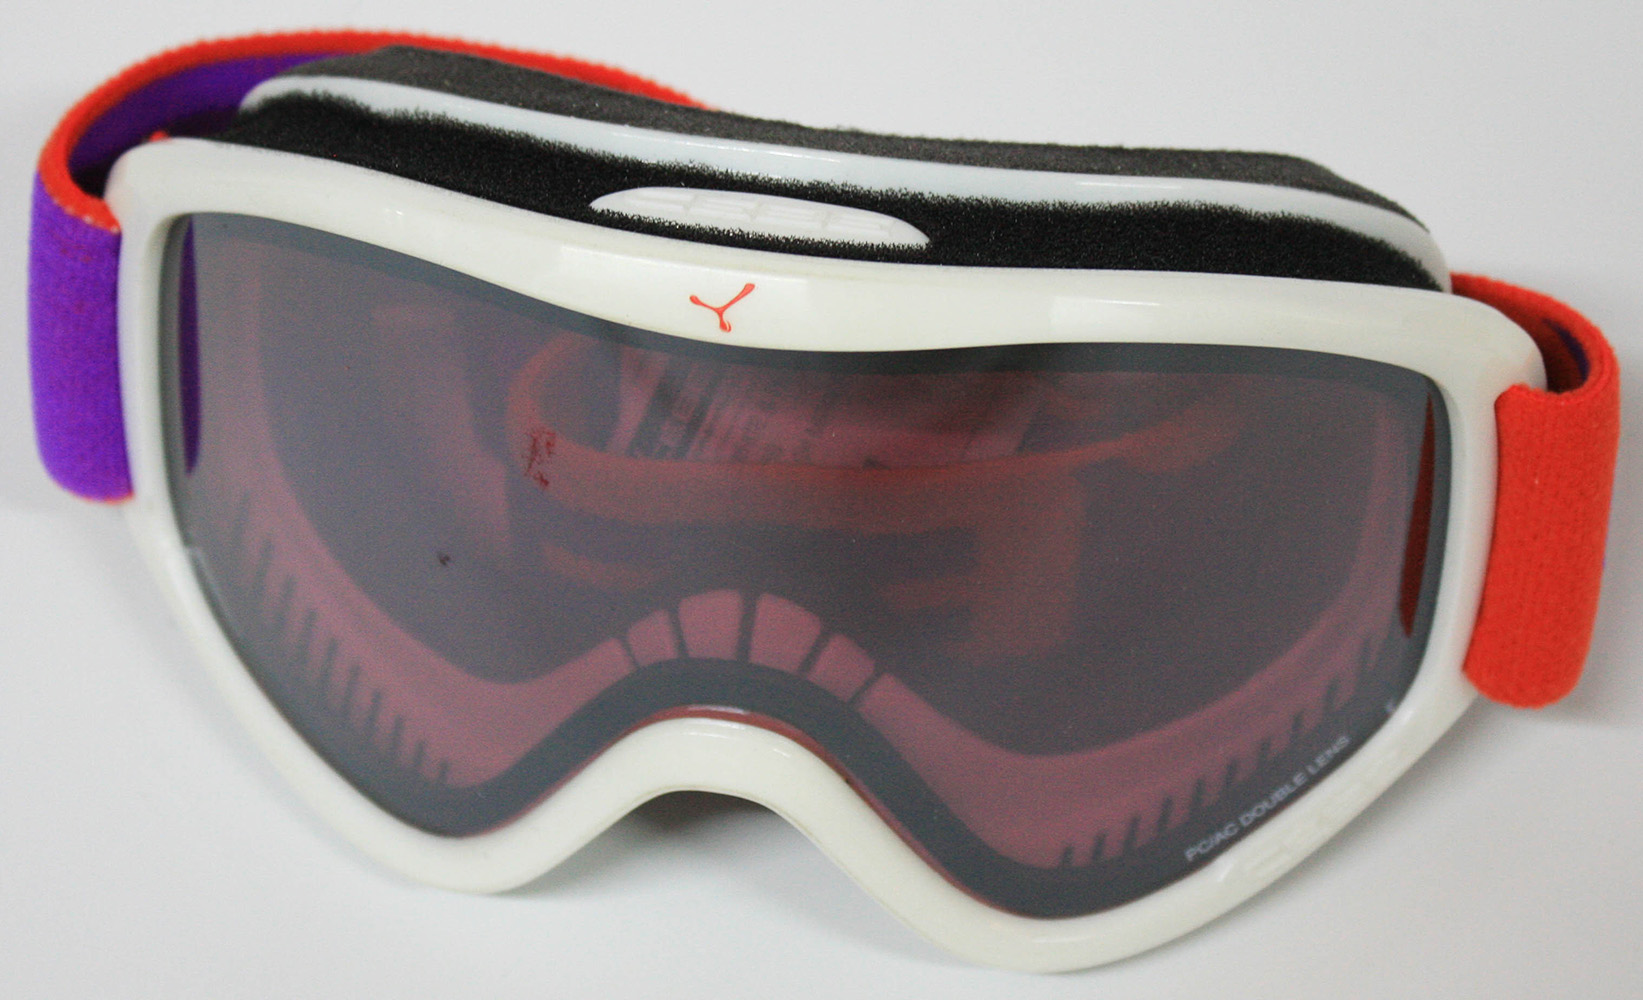 Masque de ski Cebe Striker Light Rose Flash Mirror blanc / rouge, M